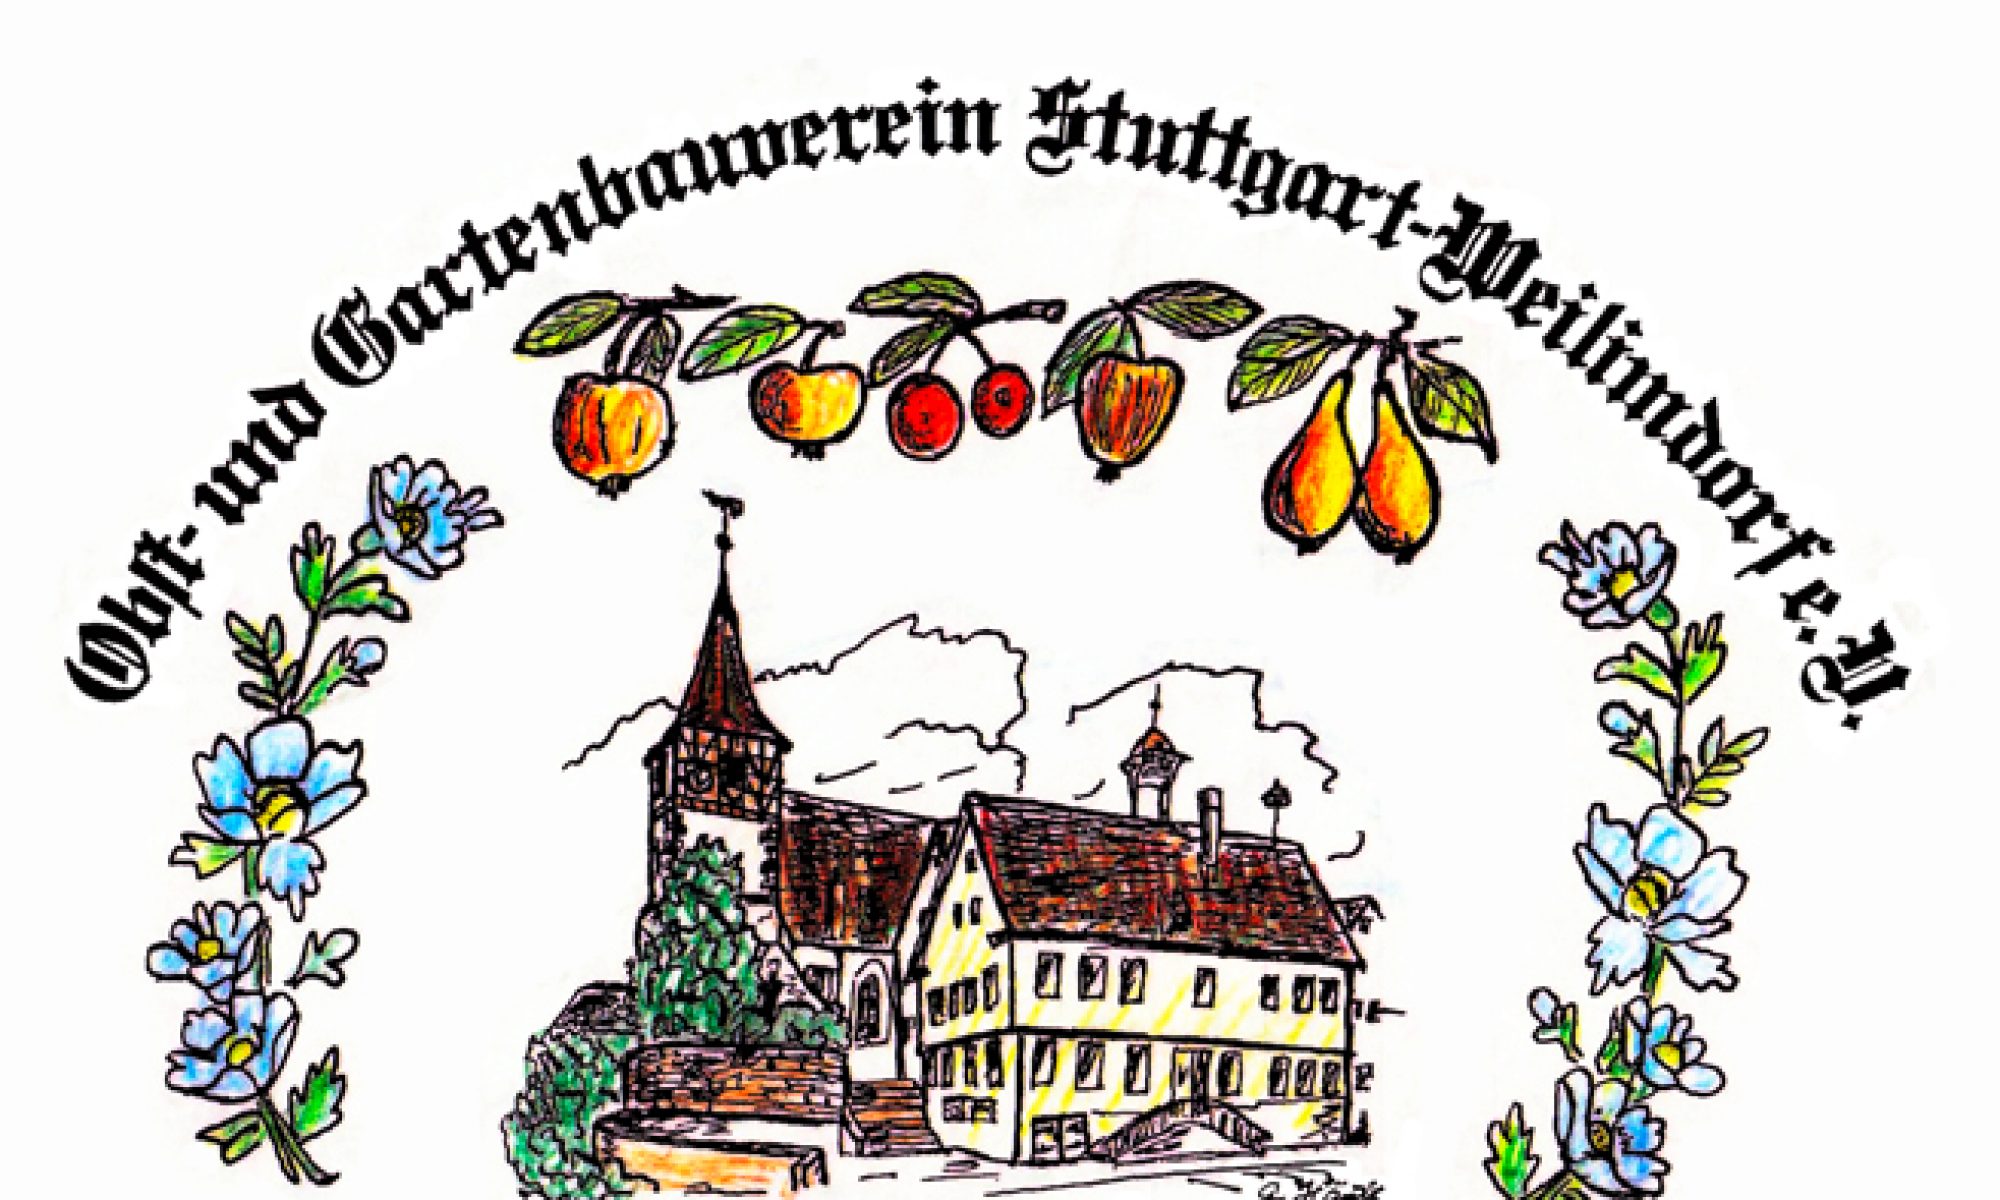 Read more about the article Jahreshauptversammlung 2023